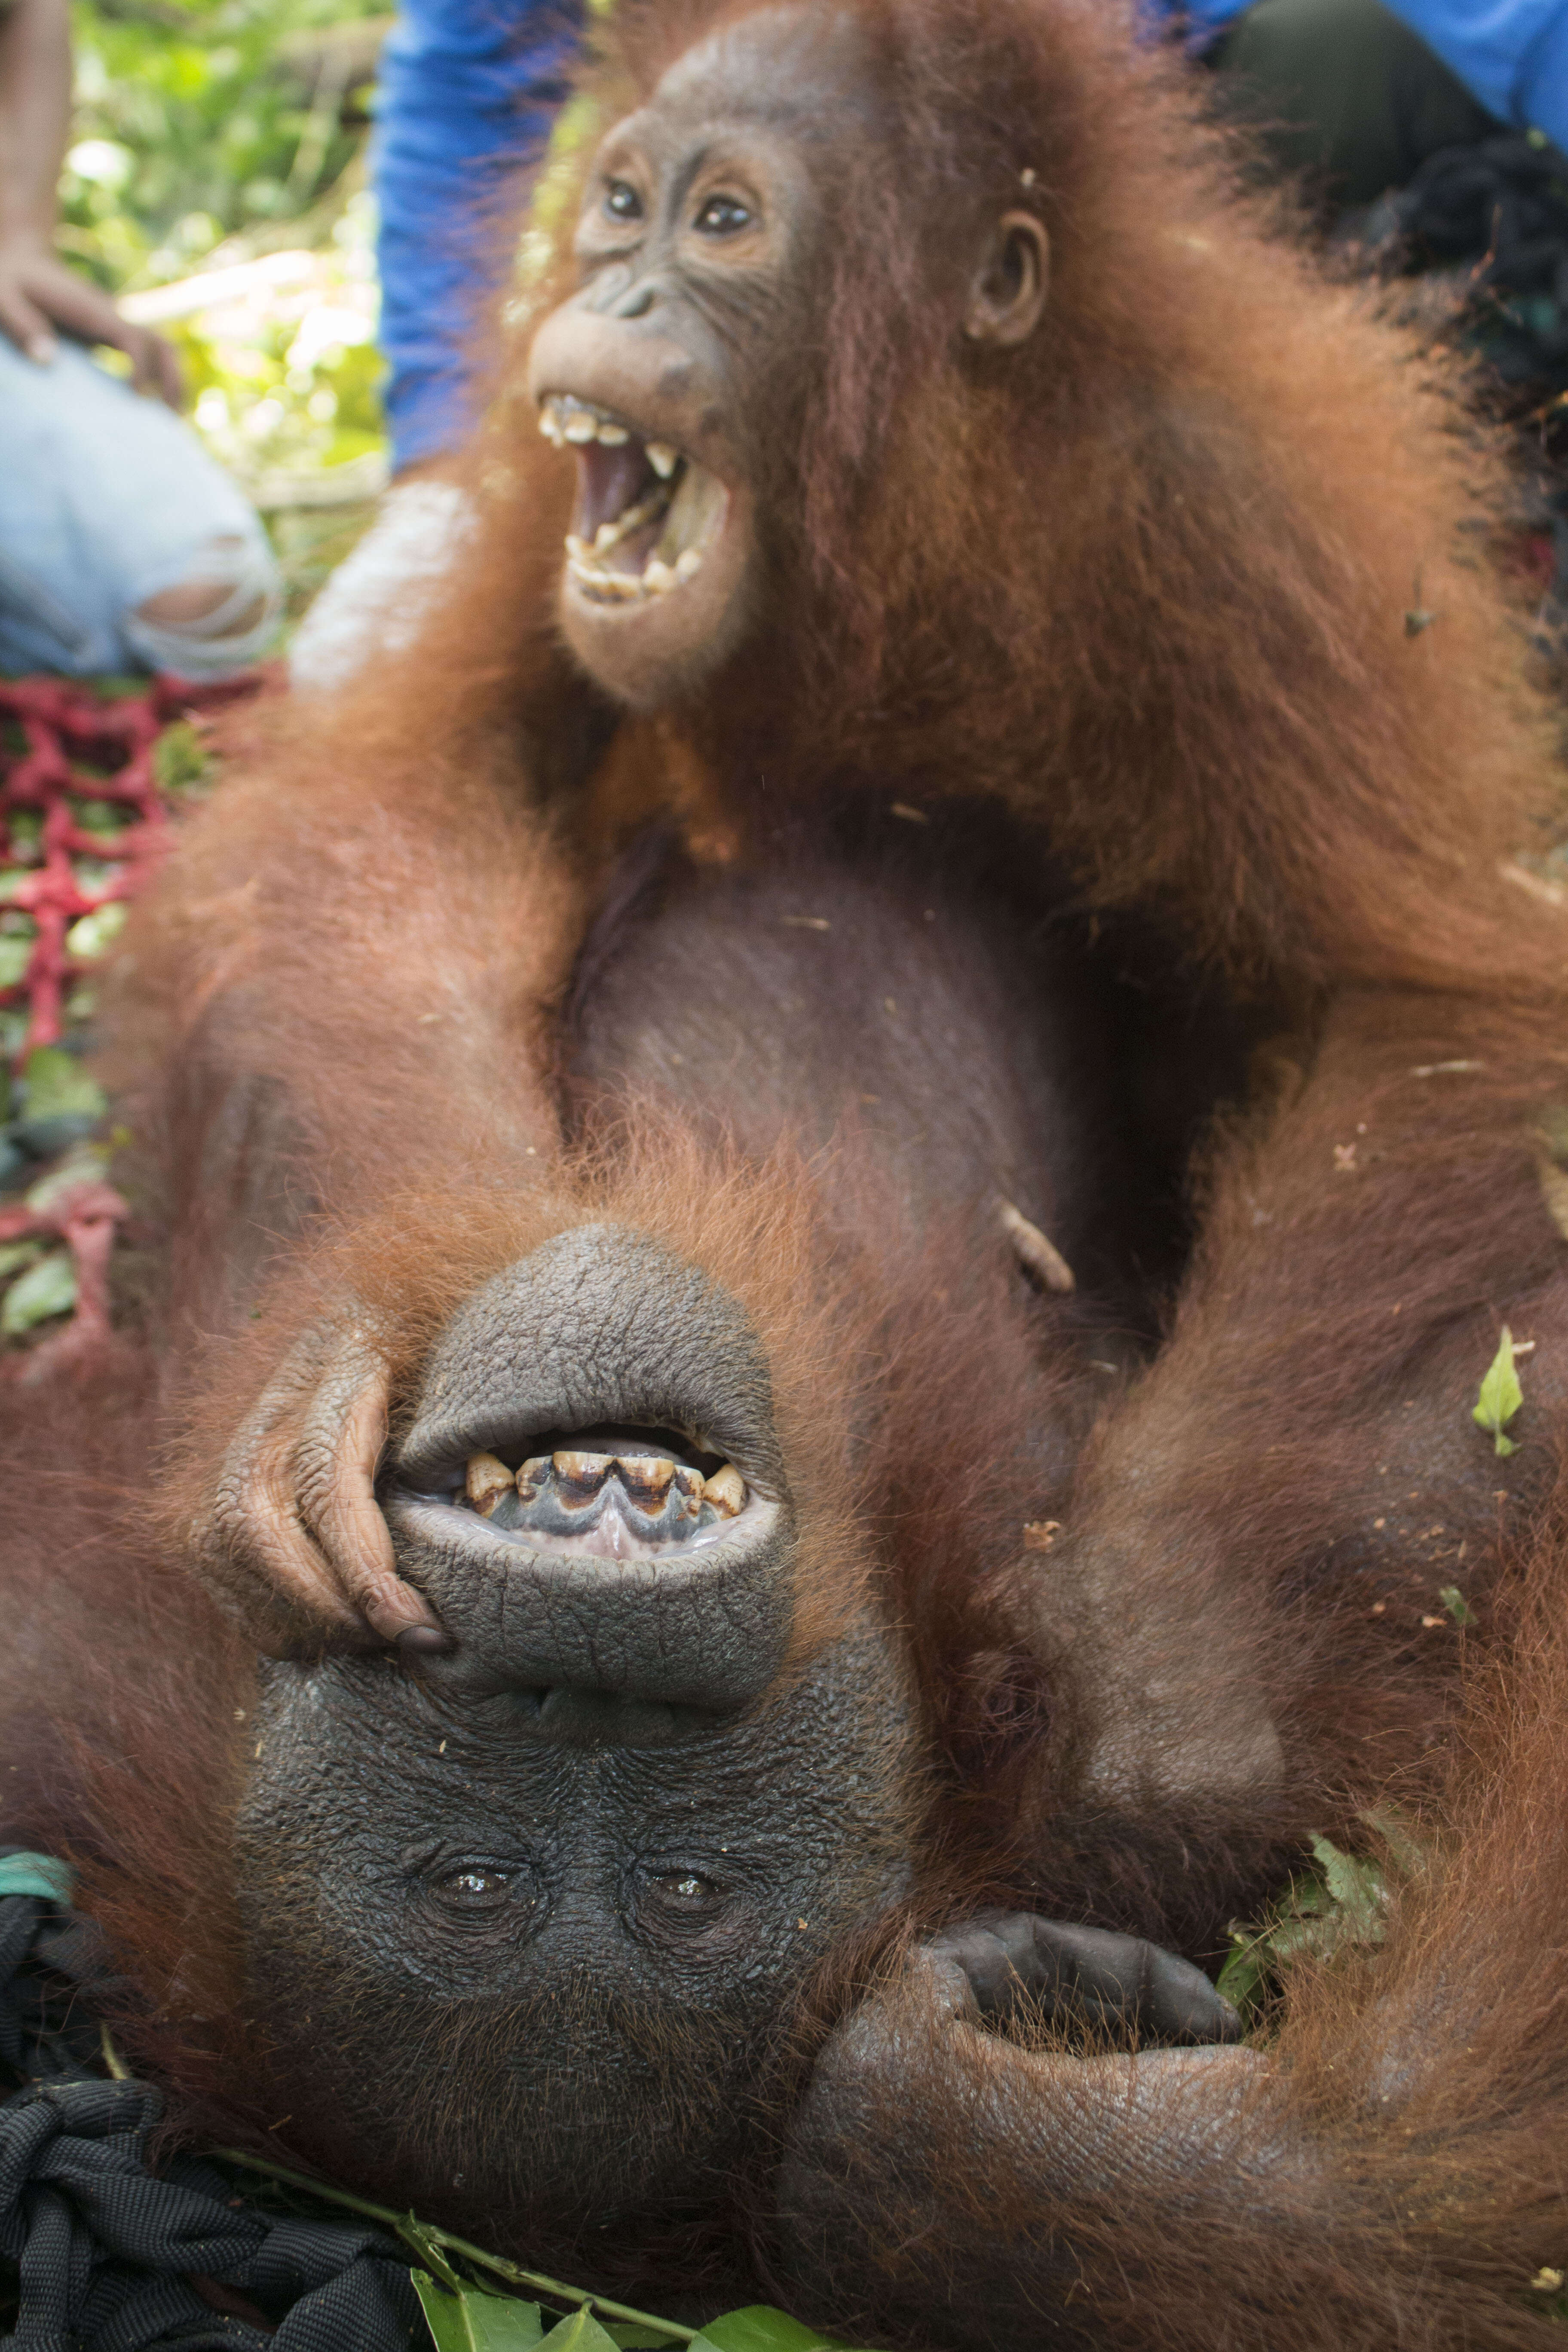 Baby orangutan clinging to mother